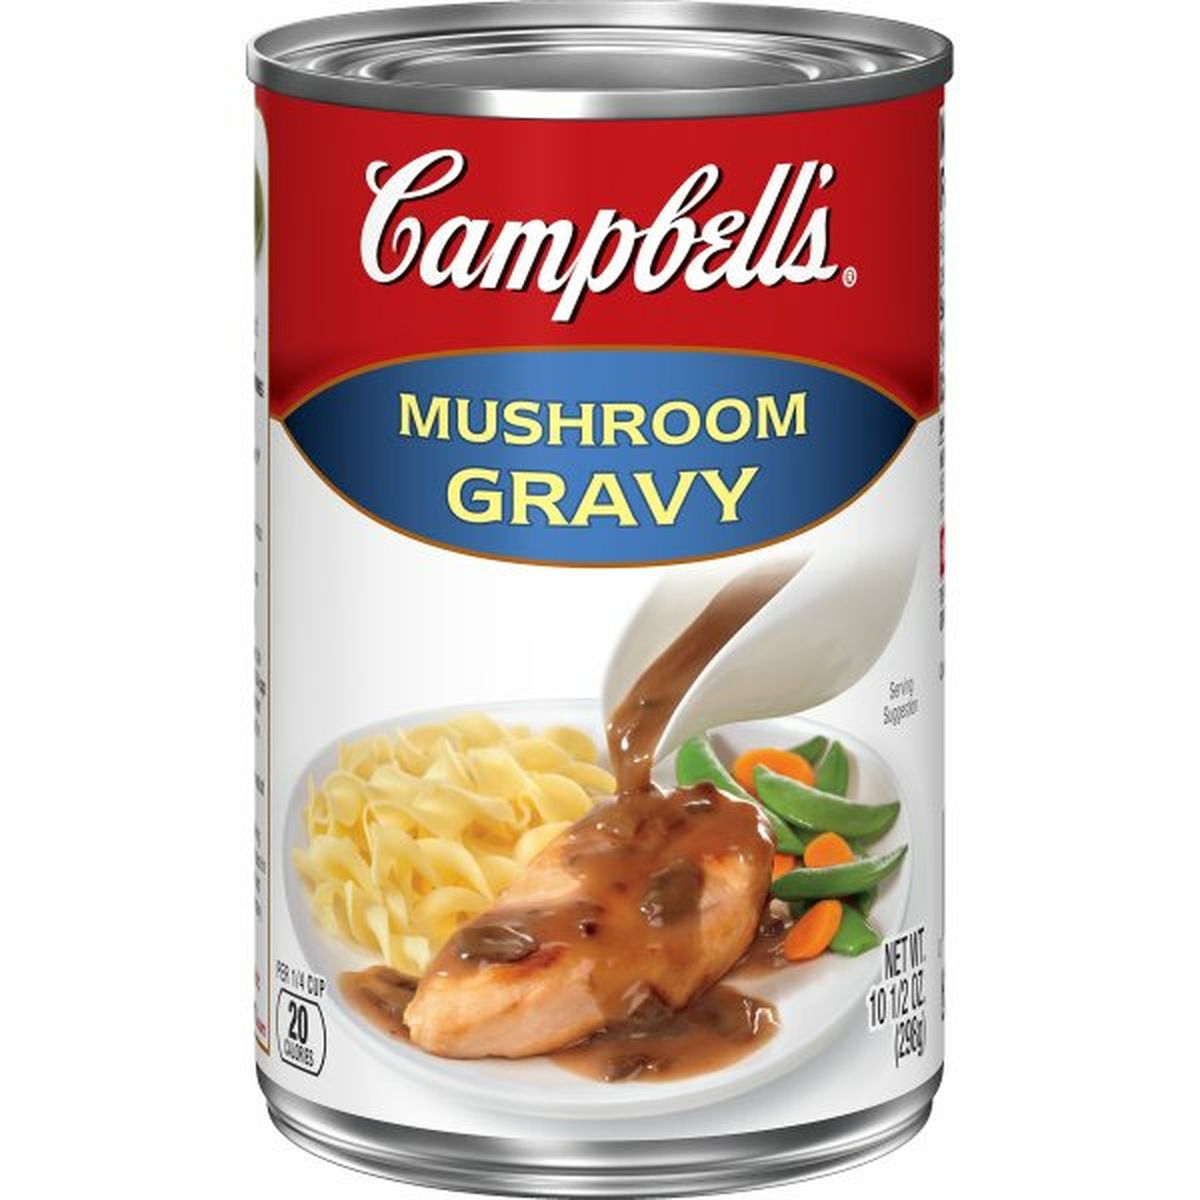 Calories in Campbell'ss Mushroom Gravy